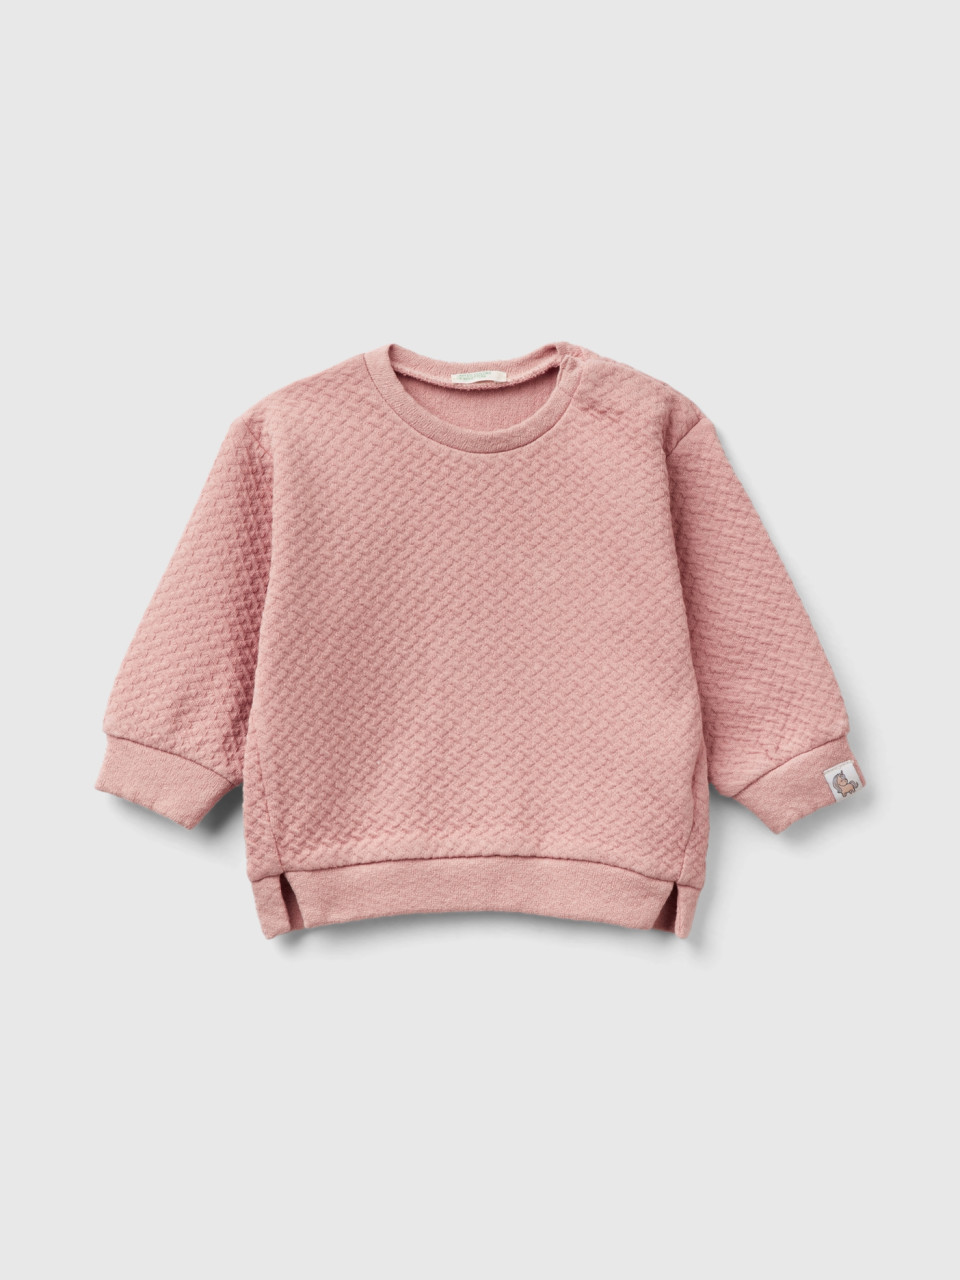 Benetton, Pullover Jacquard Sweatshirt, Soft Pink, Kids